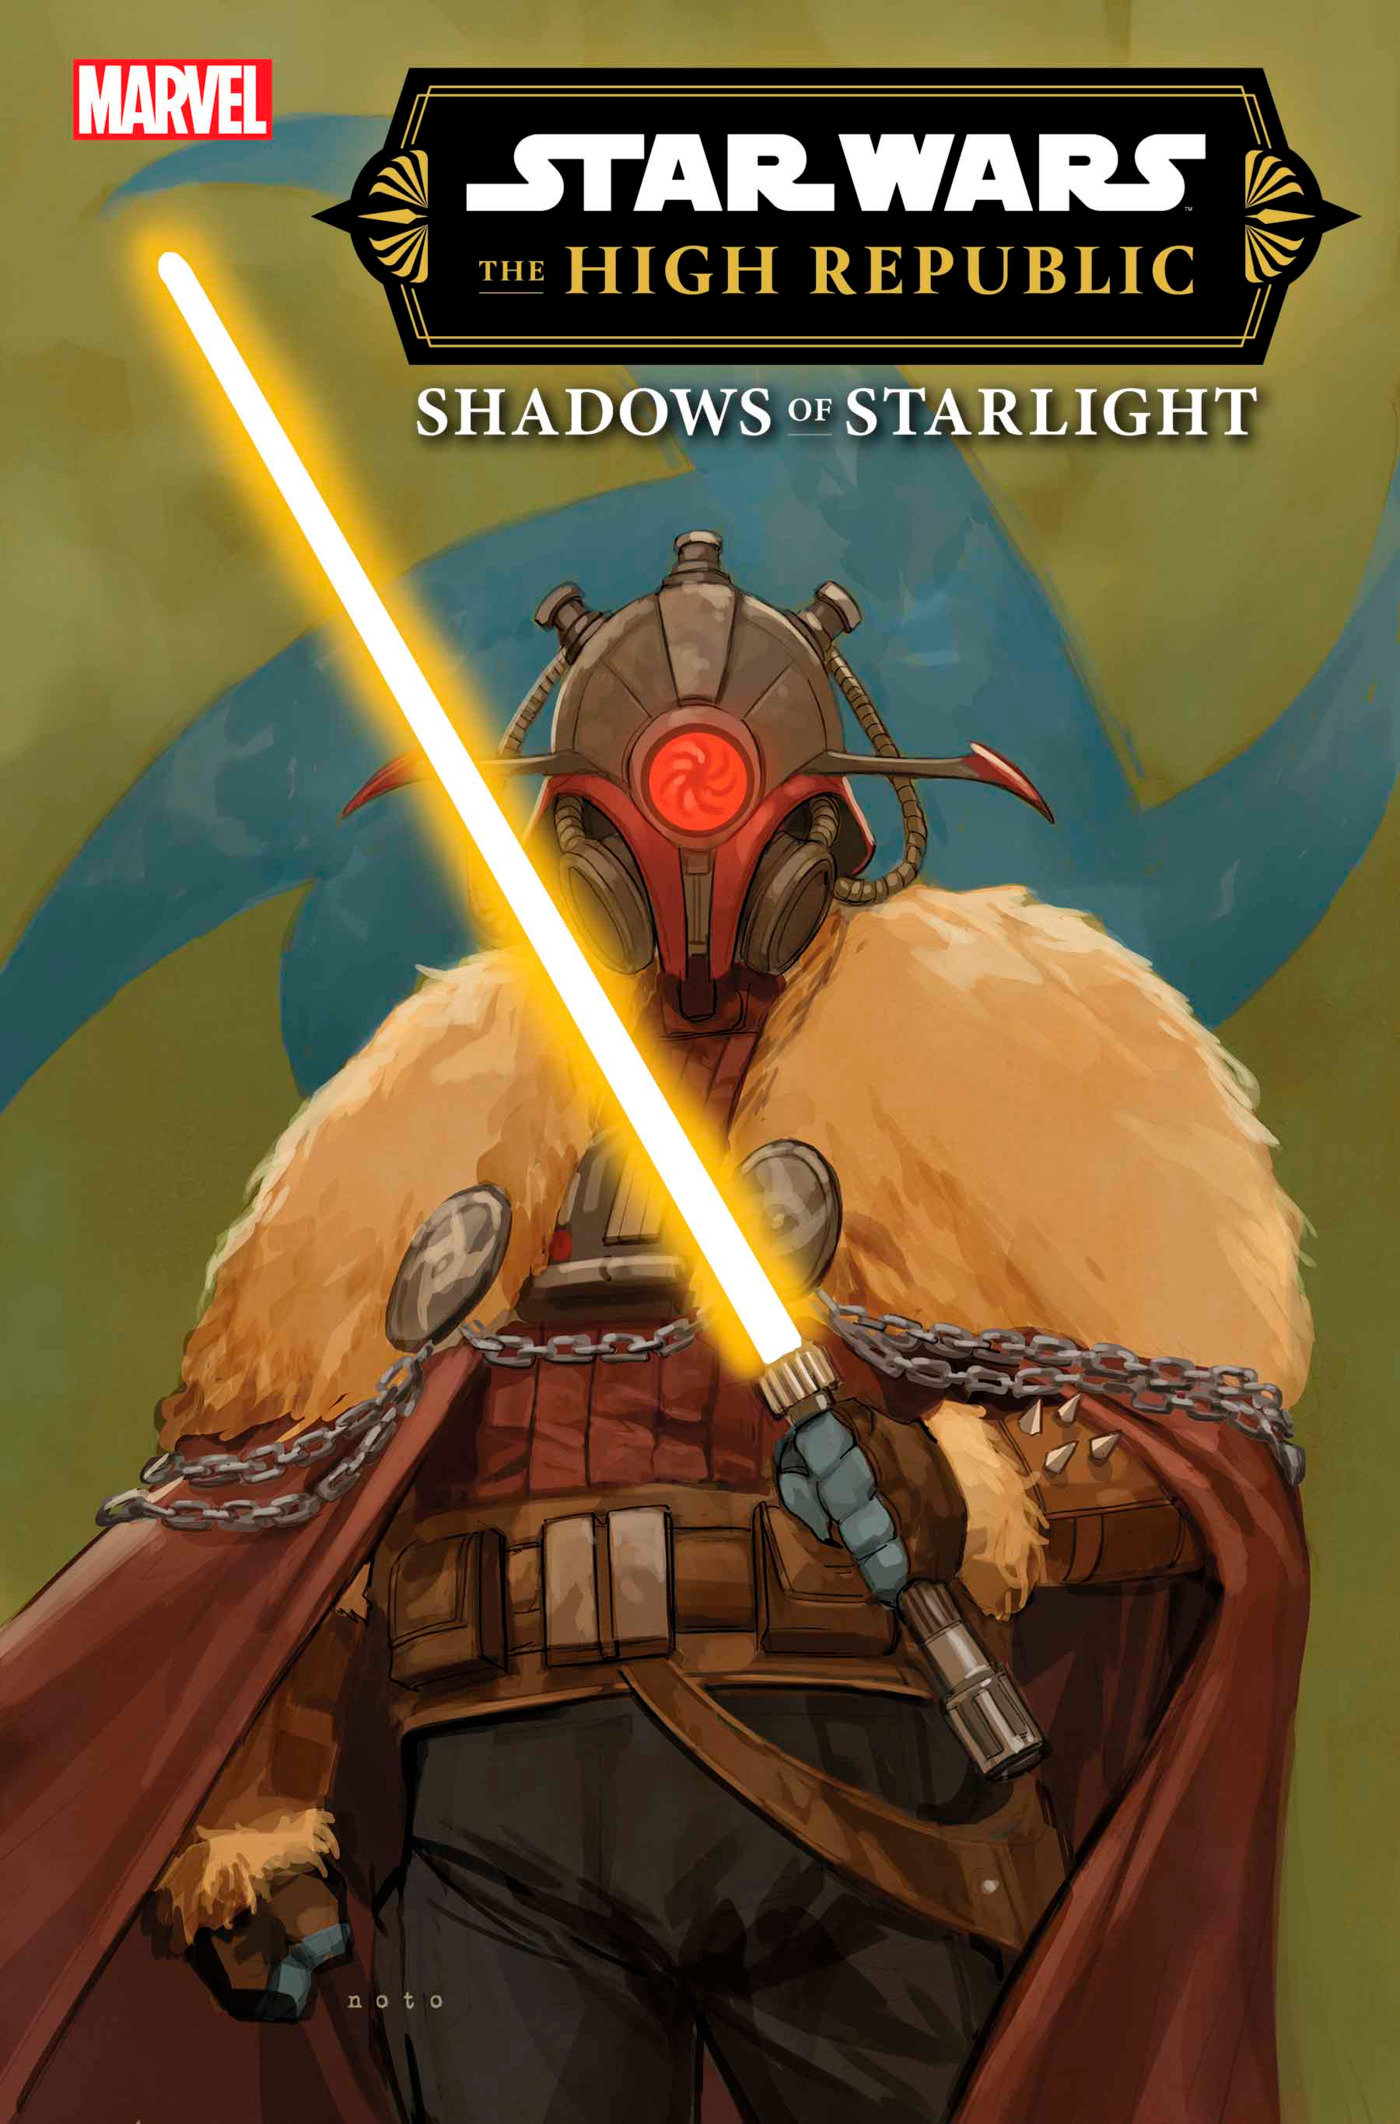 Star Wars The High Republic - Shadows of Starlight #4